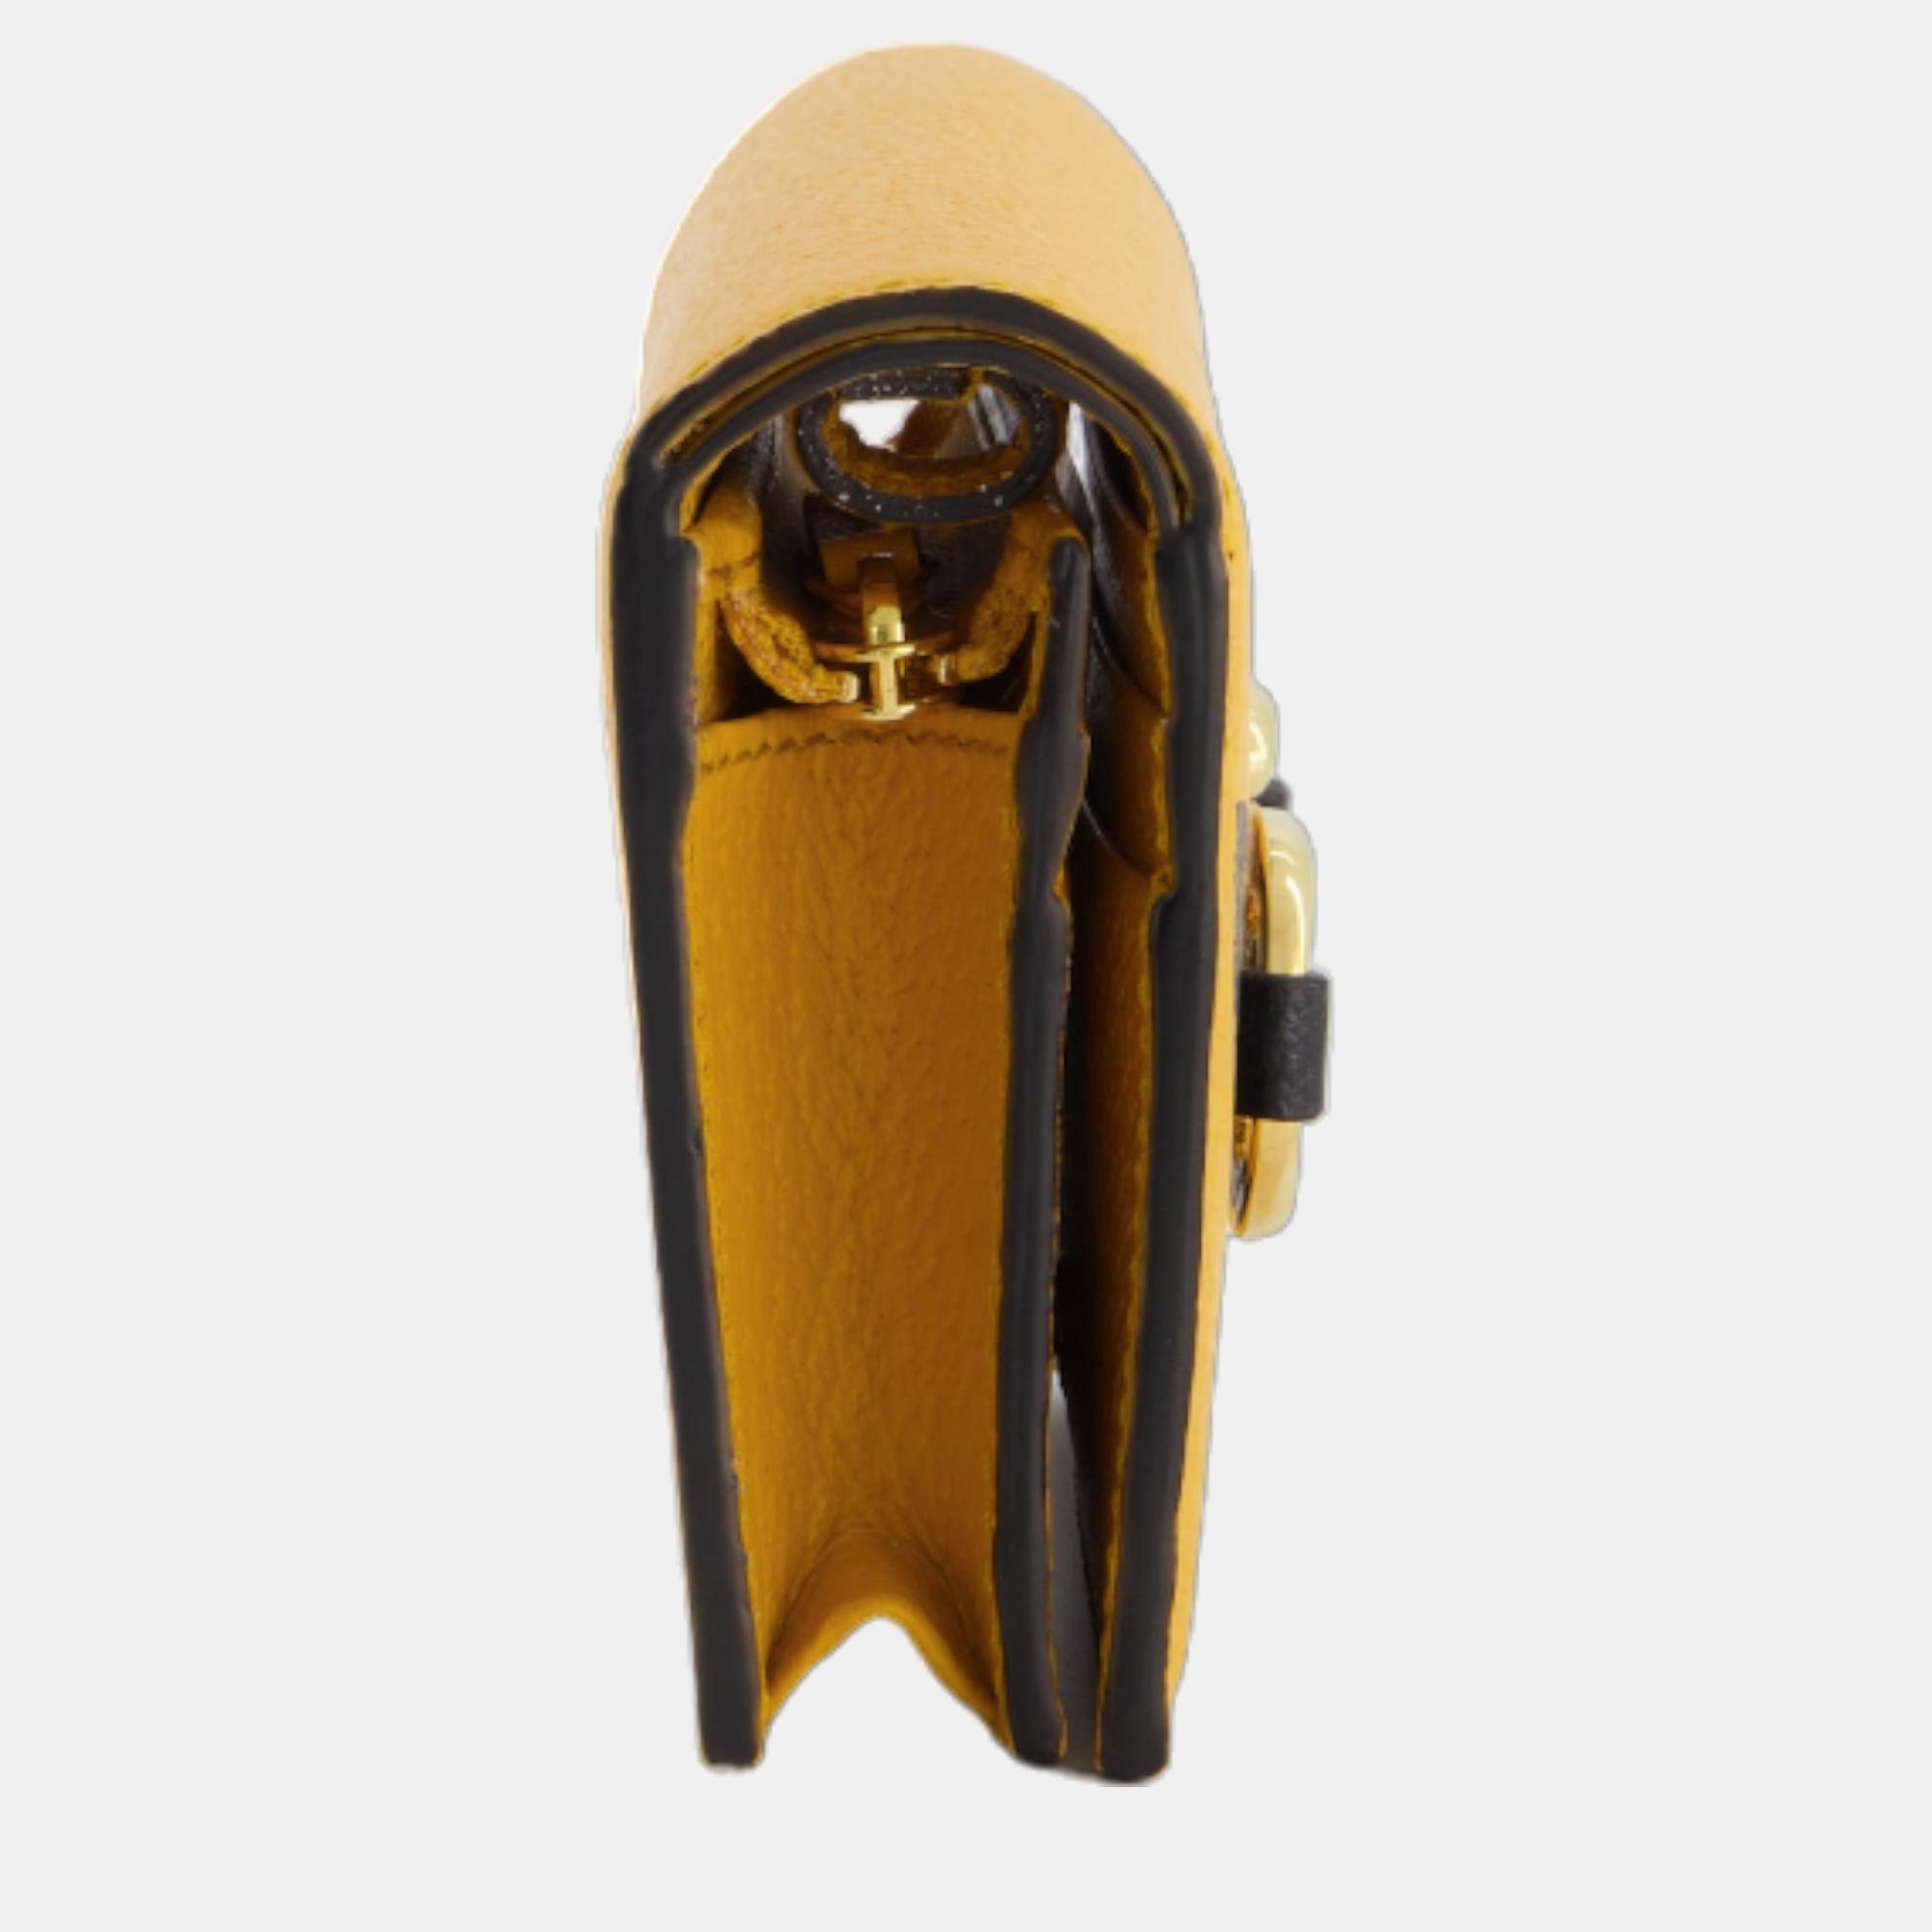 Gucci X Adidas Yellow And Black Ultra Mini Cross-Body Bag With Gold Horsebit Detail